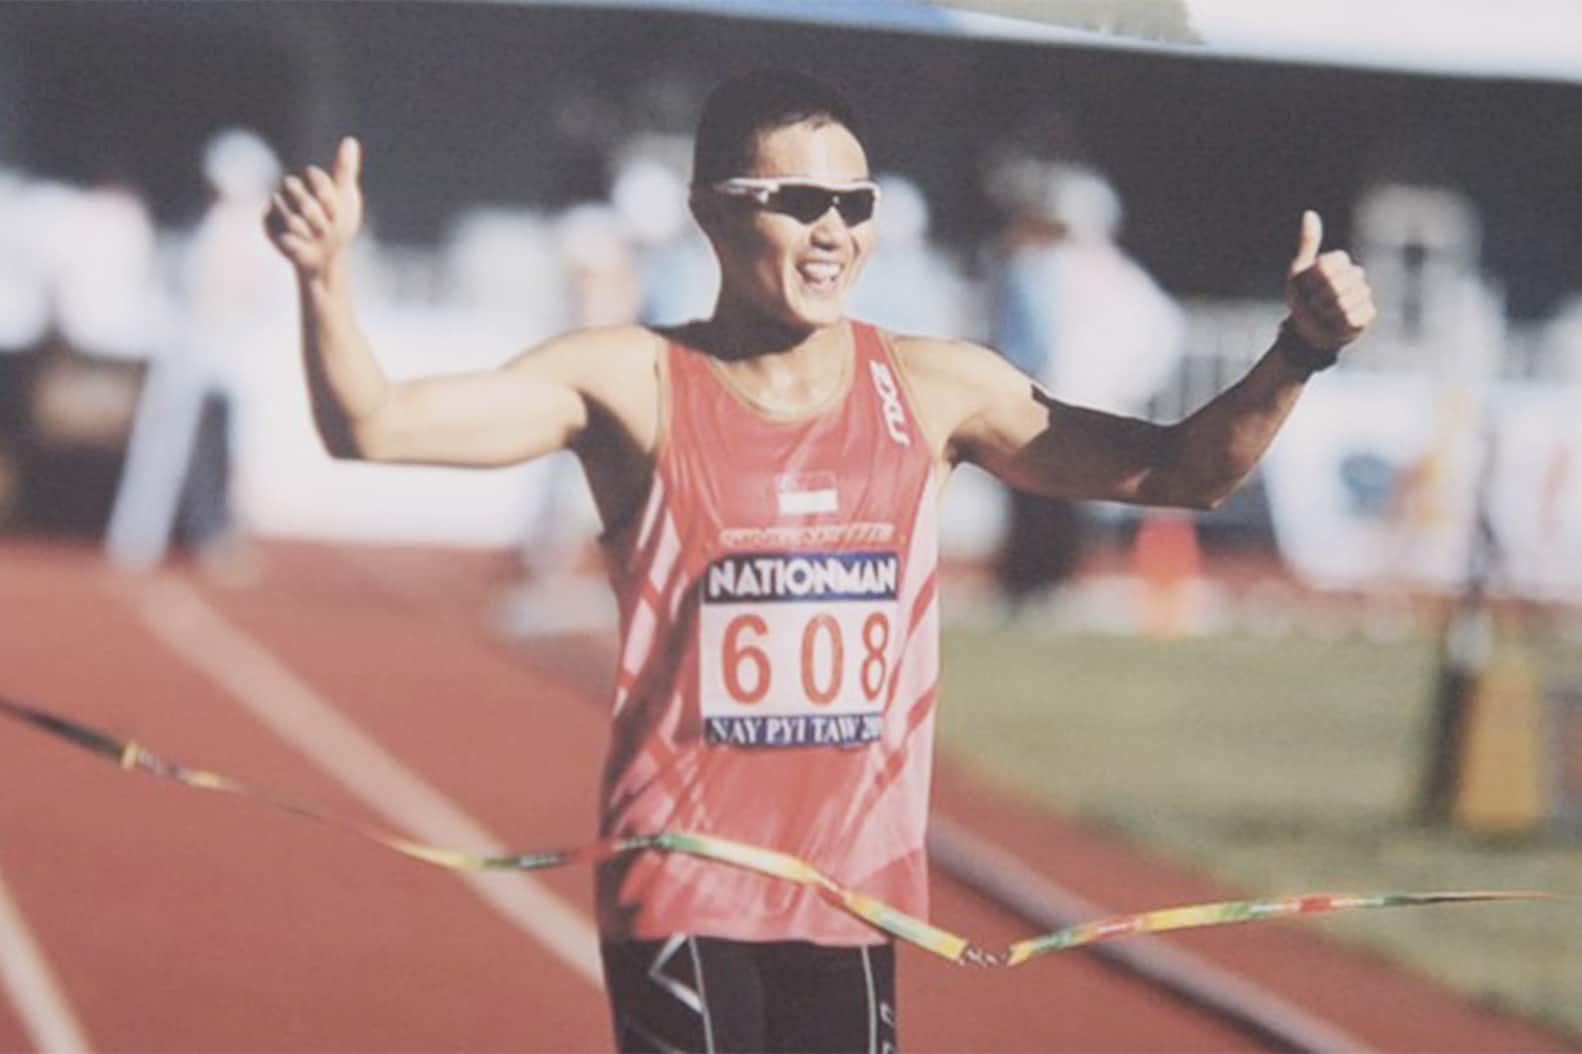 Top marathoner Mok Ying Ren on the greatest race of his life